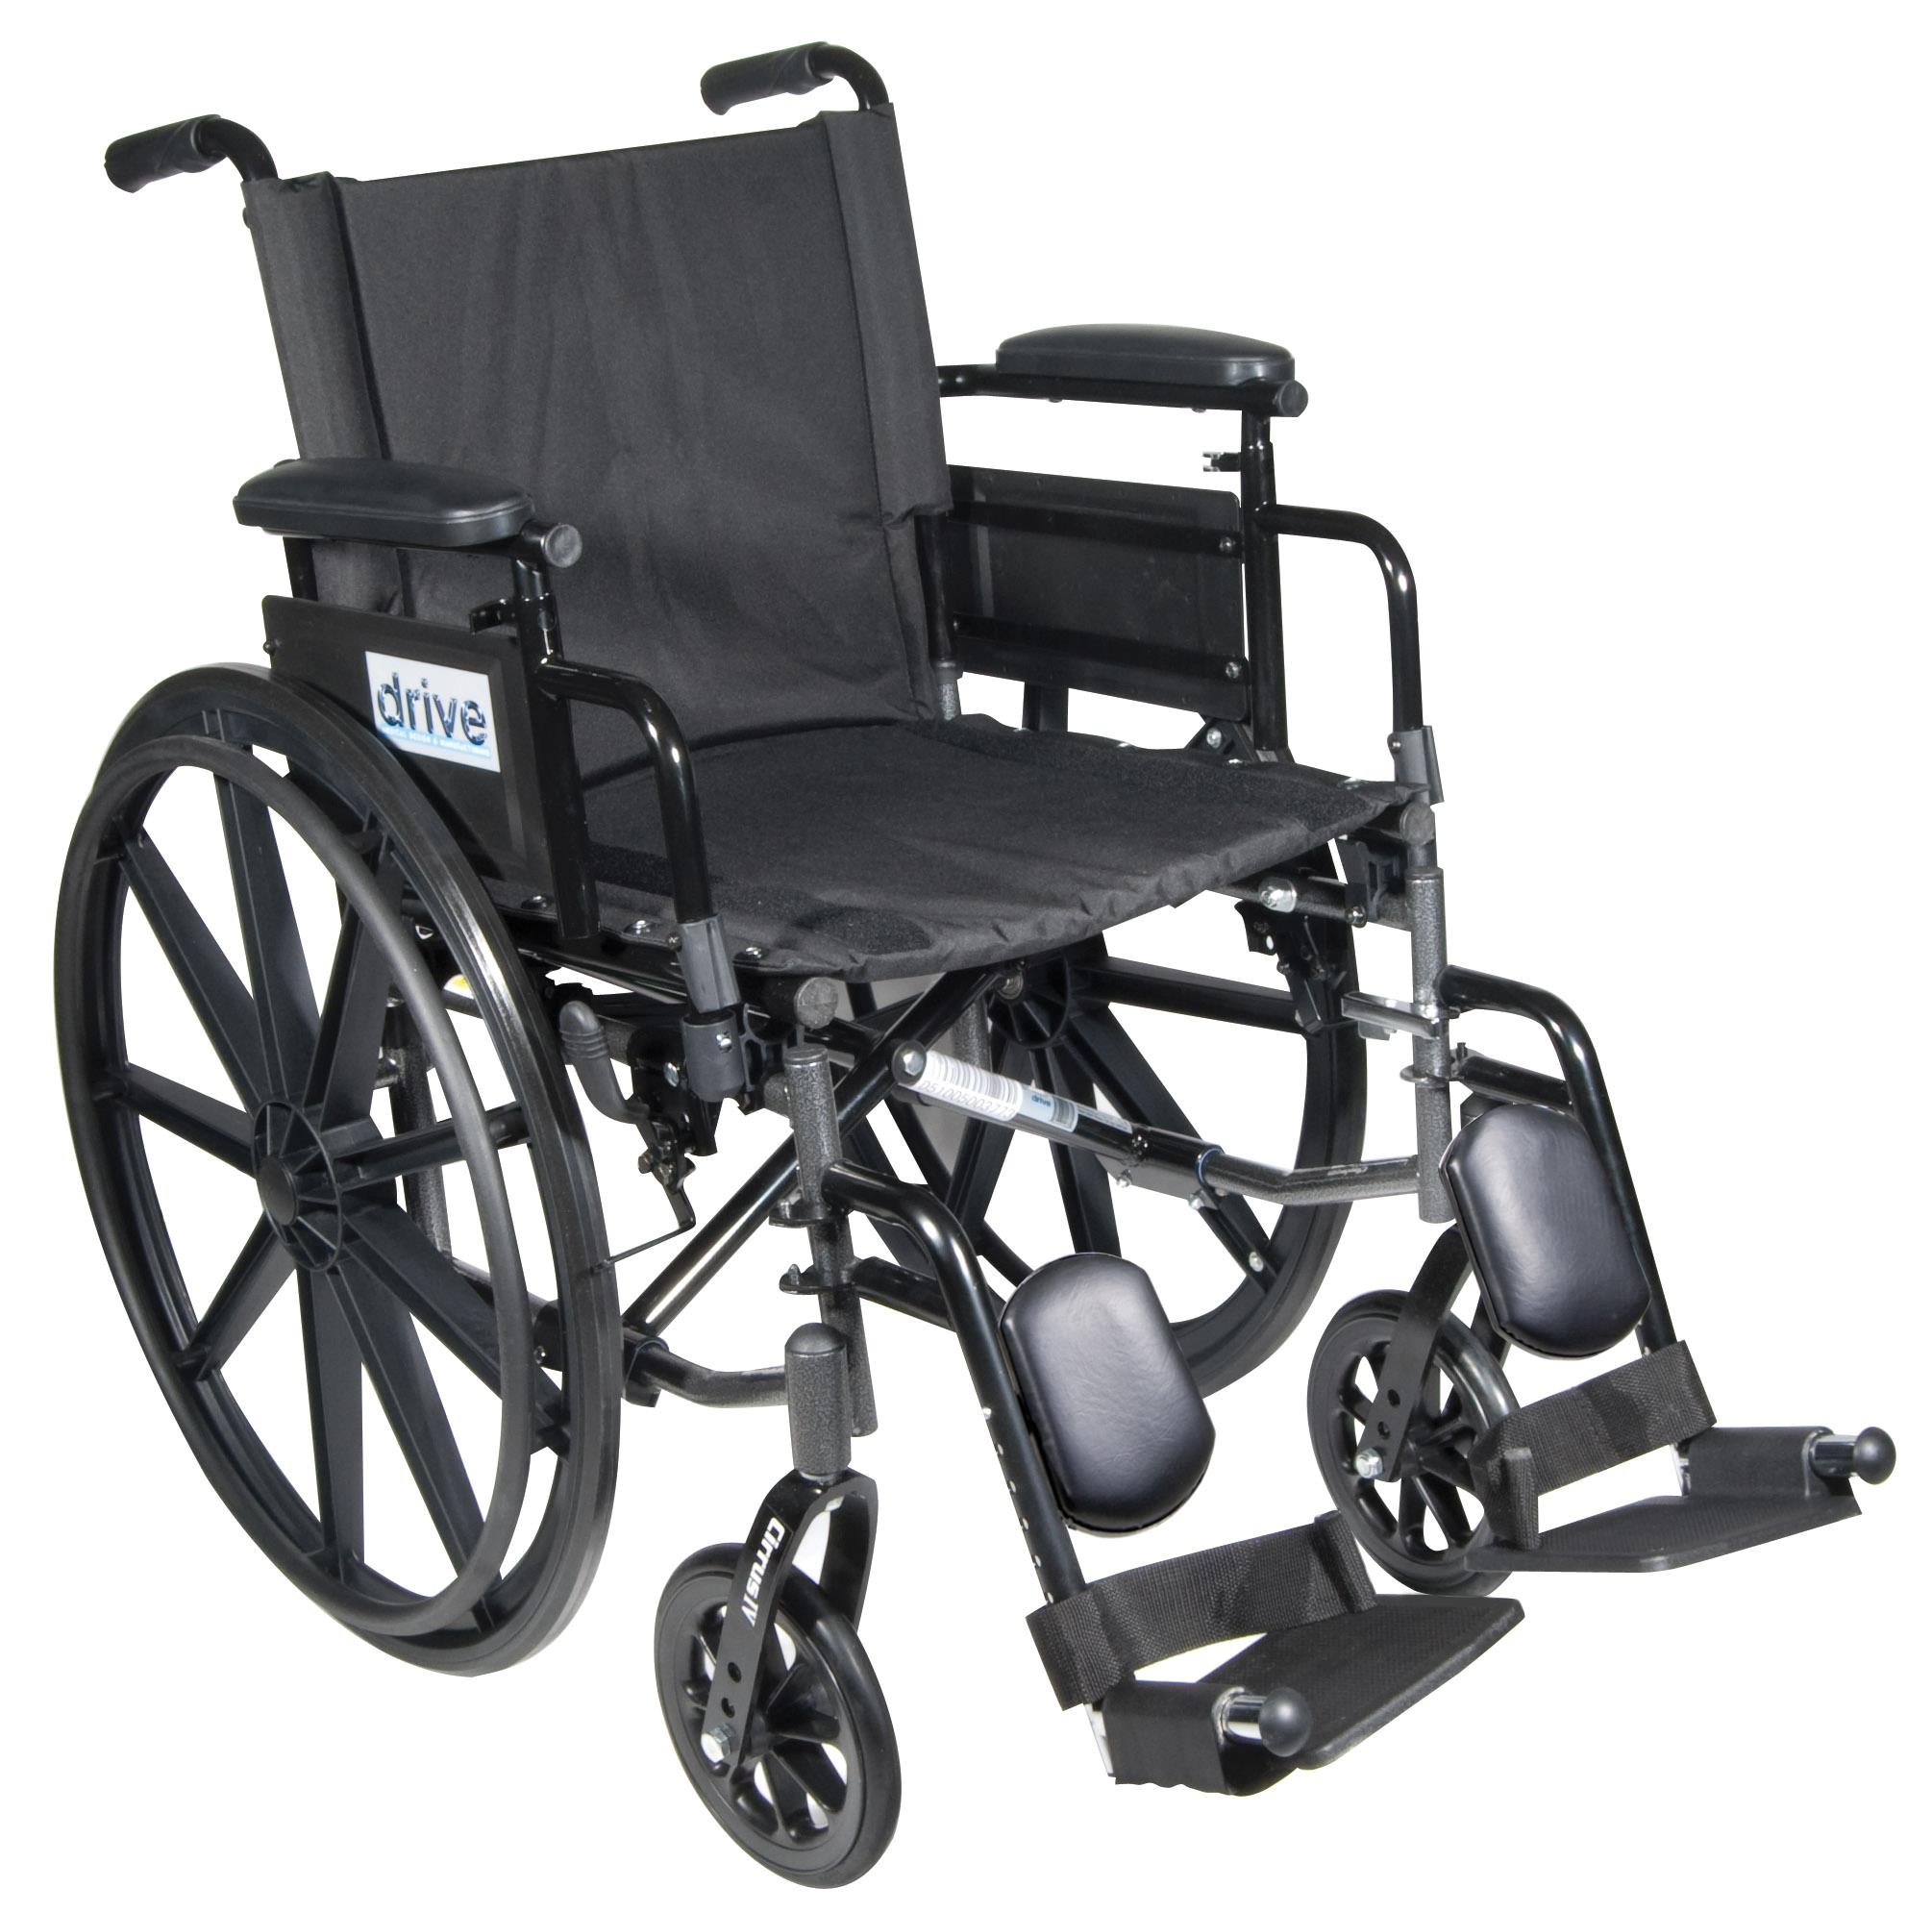 Drive Medical c420addasv elr Cirrus IV Lightweight Dual Axle Wheelchair with Adj